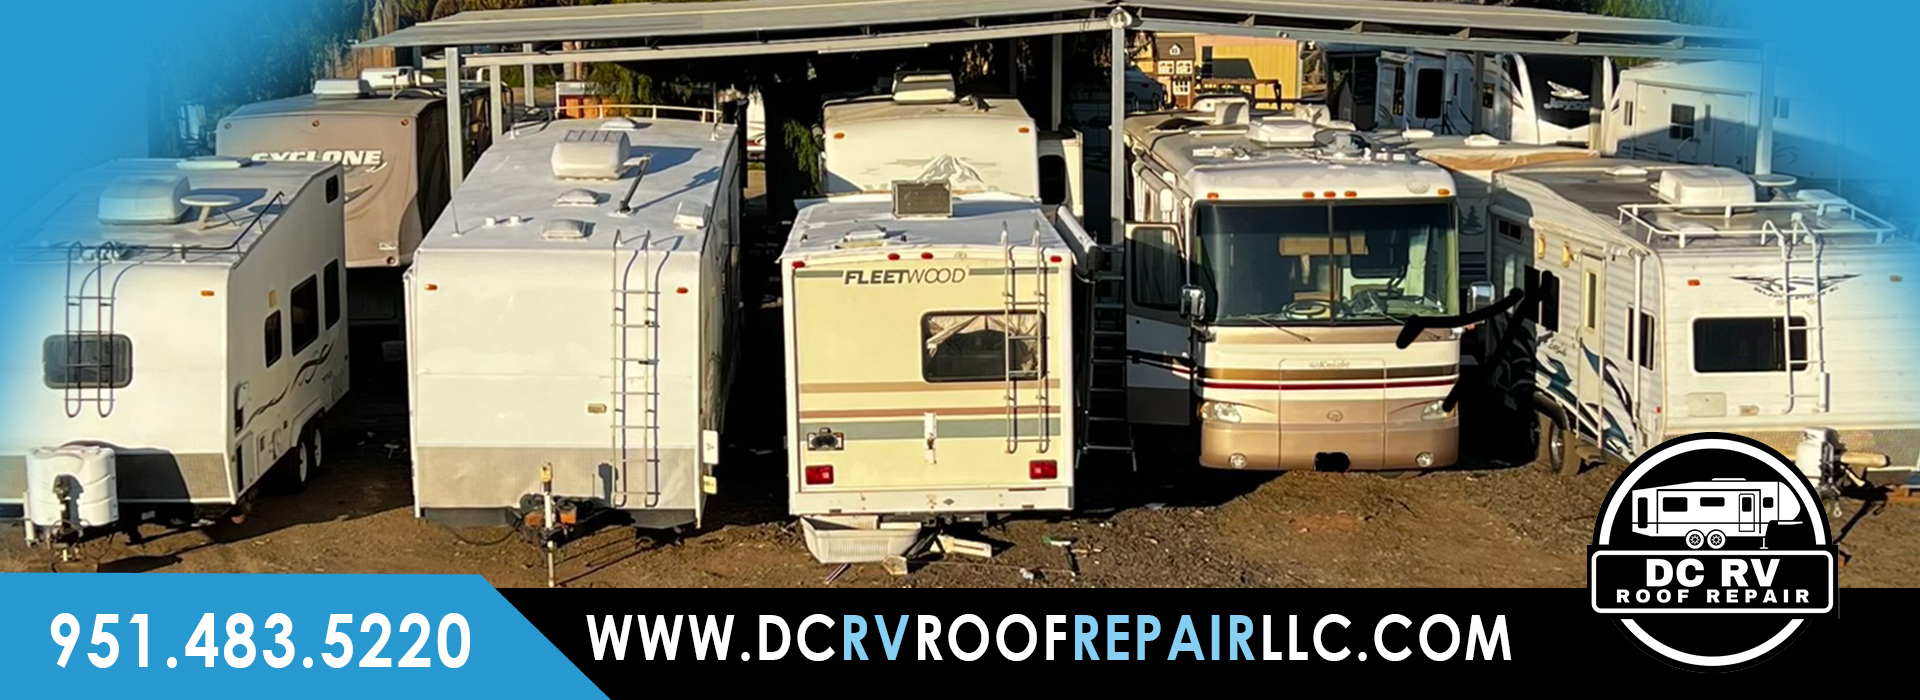 DC RV  Roof Repair LLC leaks on your foofing